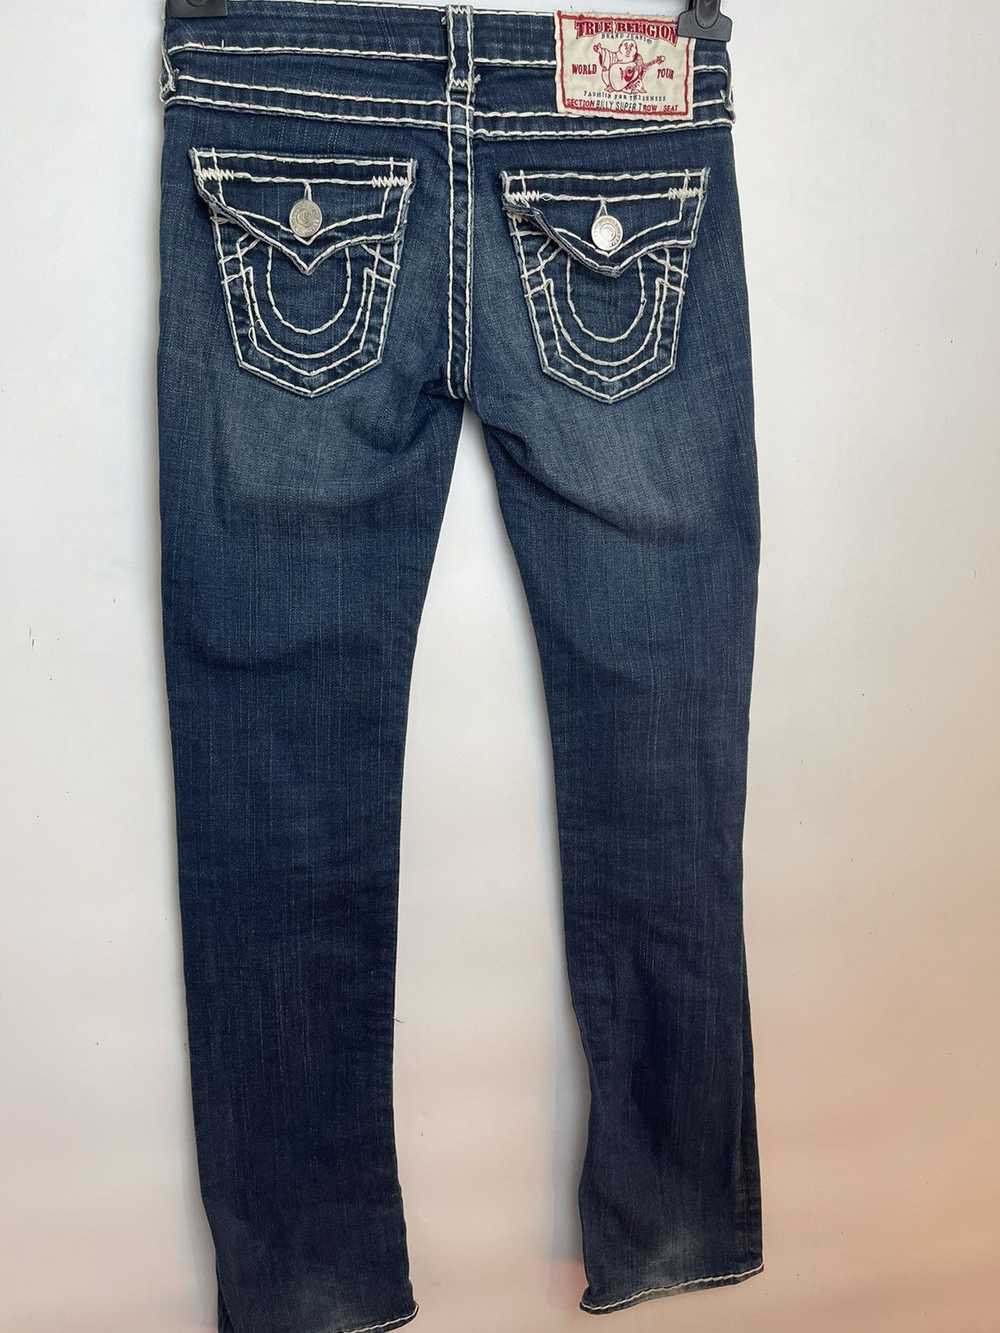 True Religion True Religion jeans made in USA - image 1